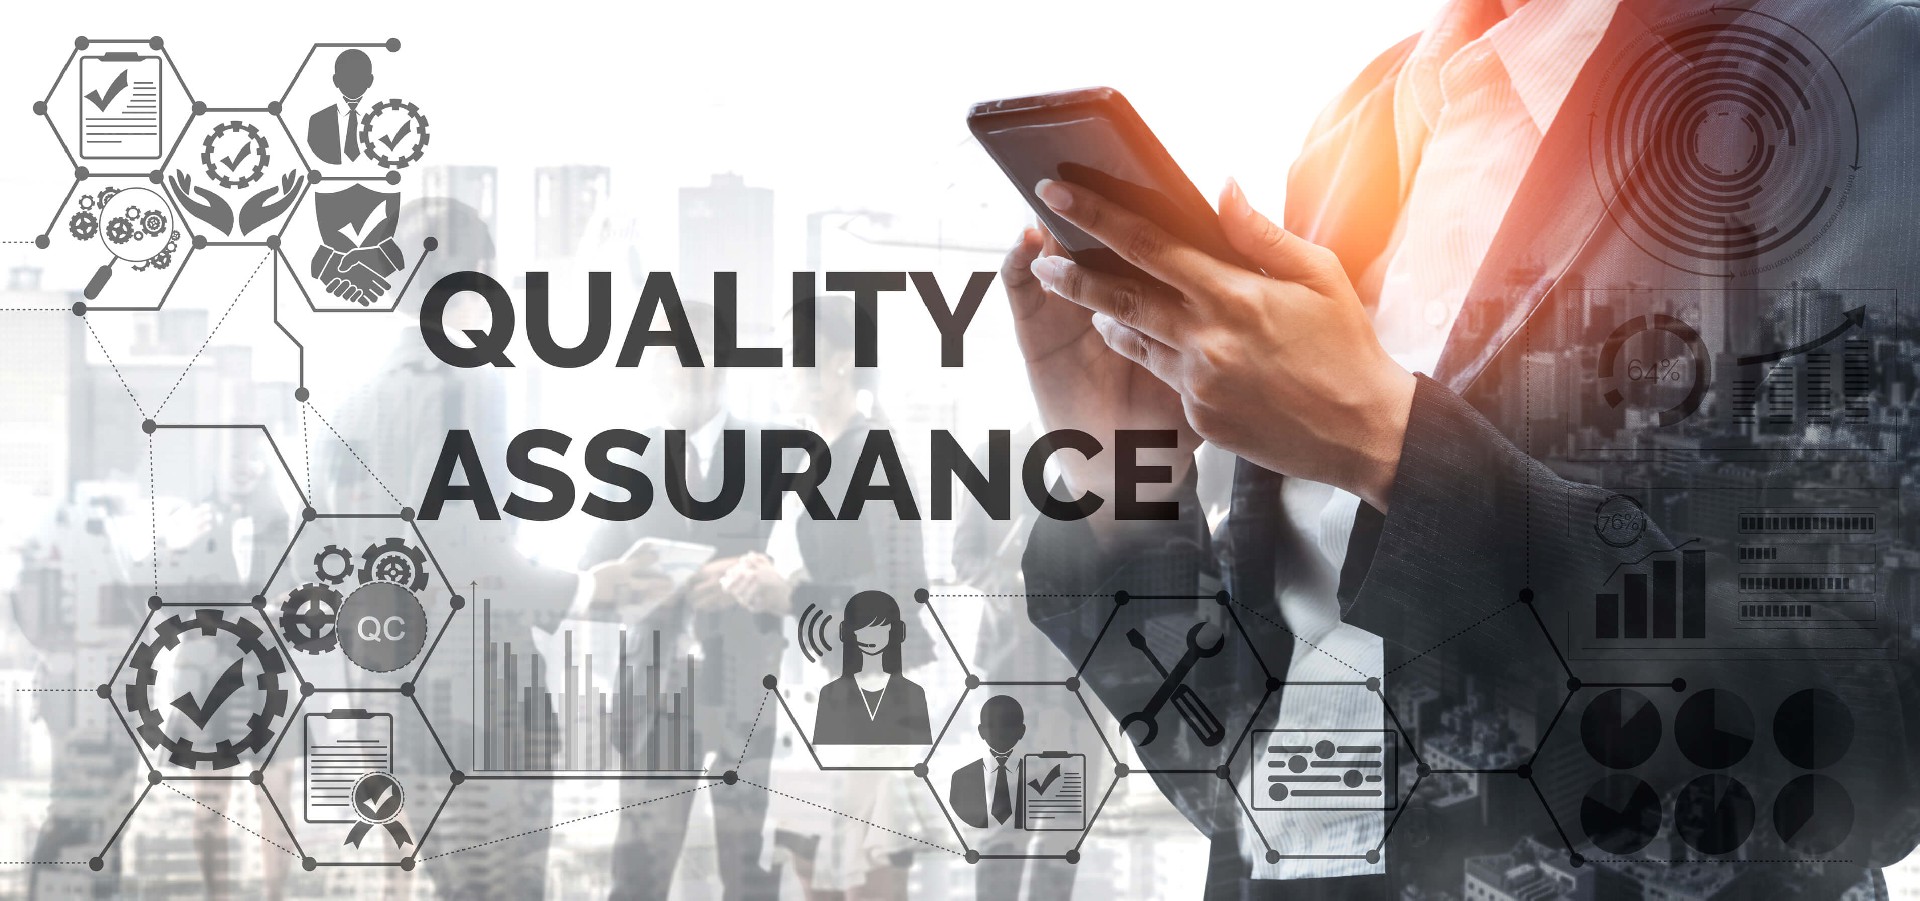 Quality-Assurance-Image.jpg